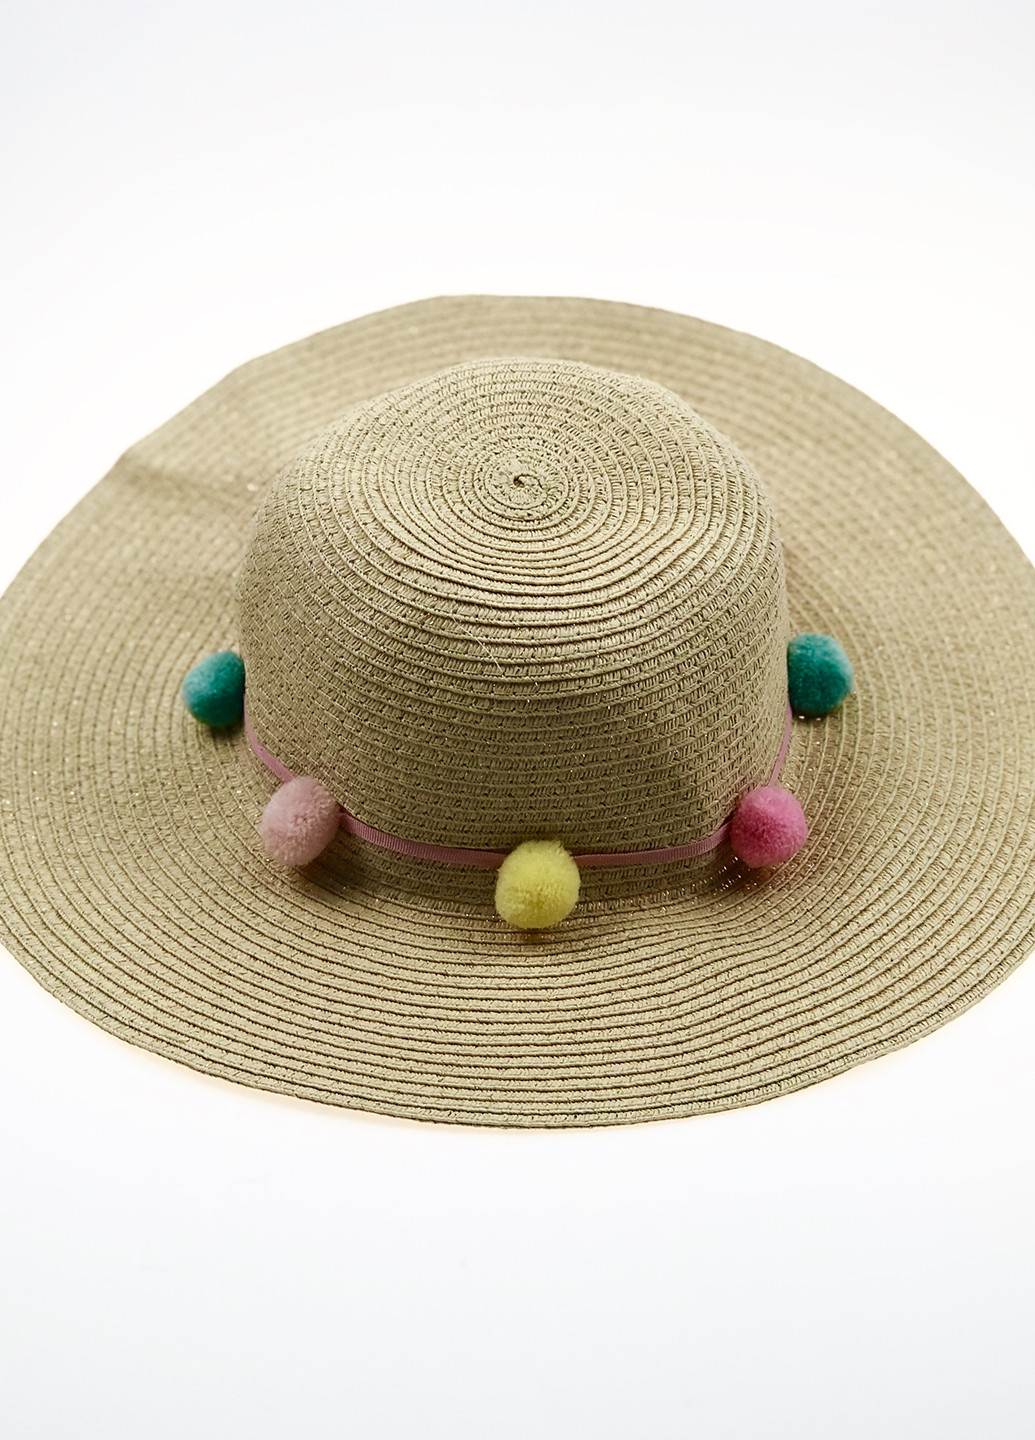 Шляпа H&M широкополая однотонная бежевая кэжуал солома